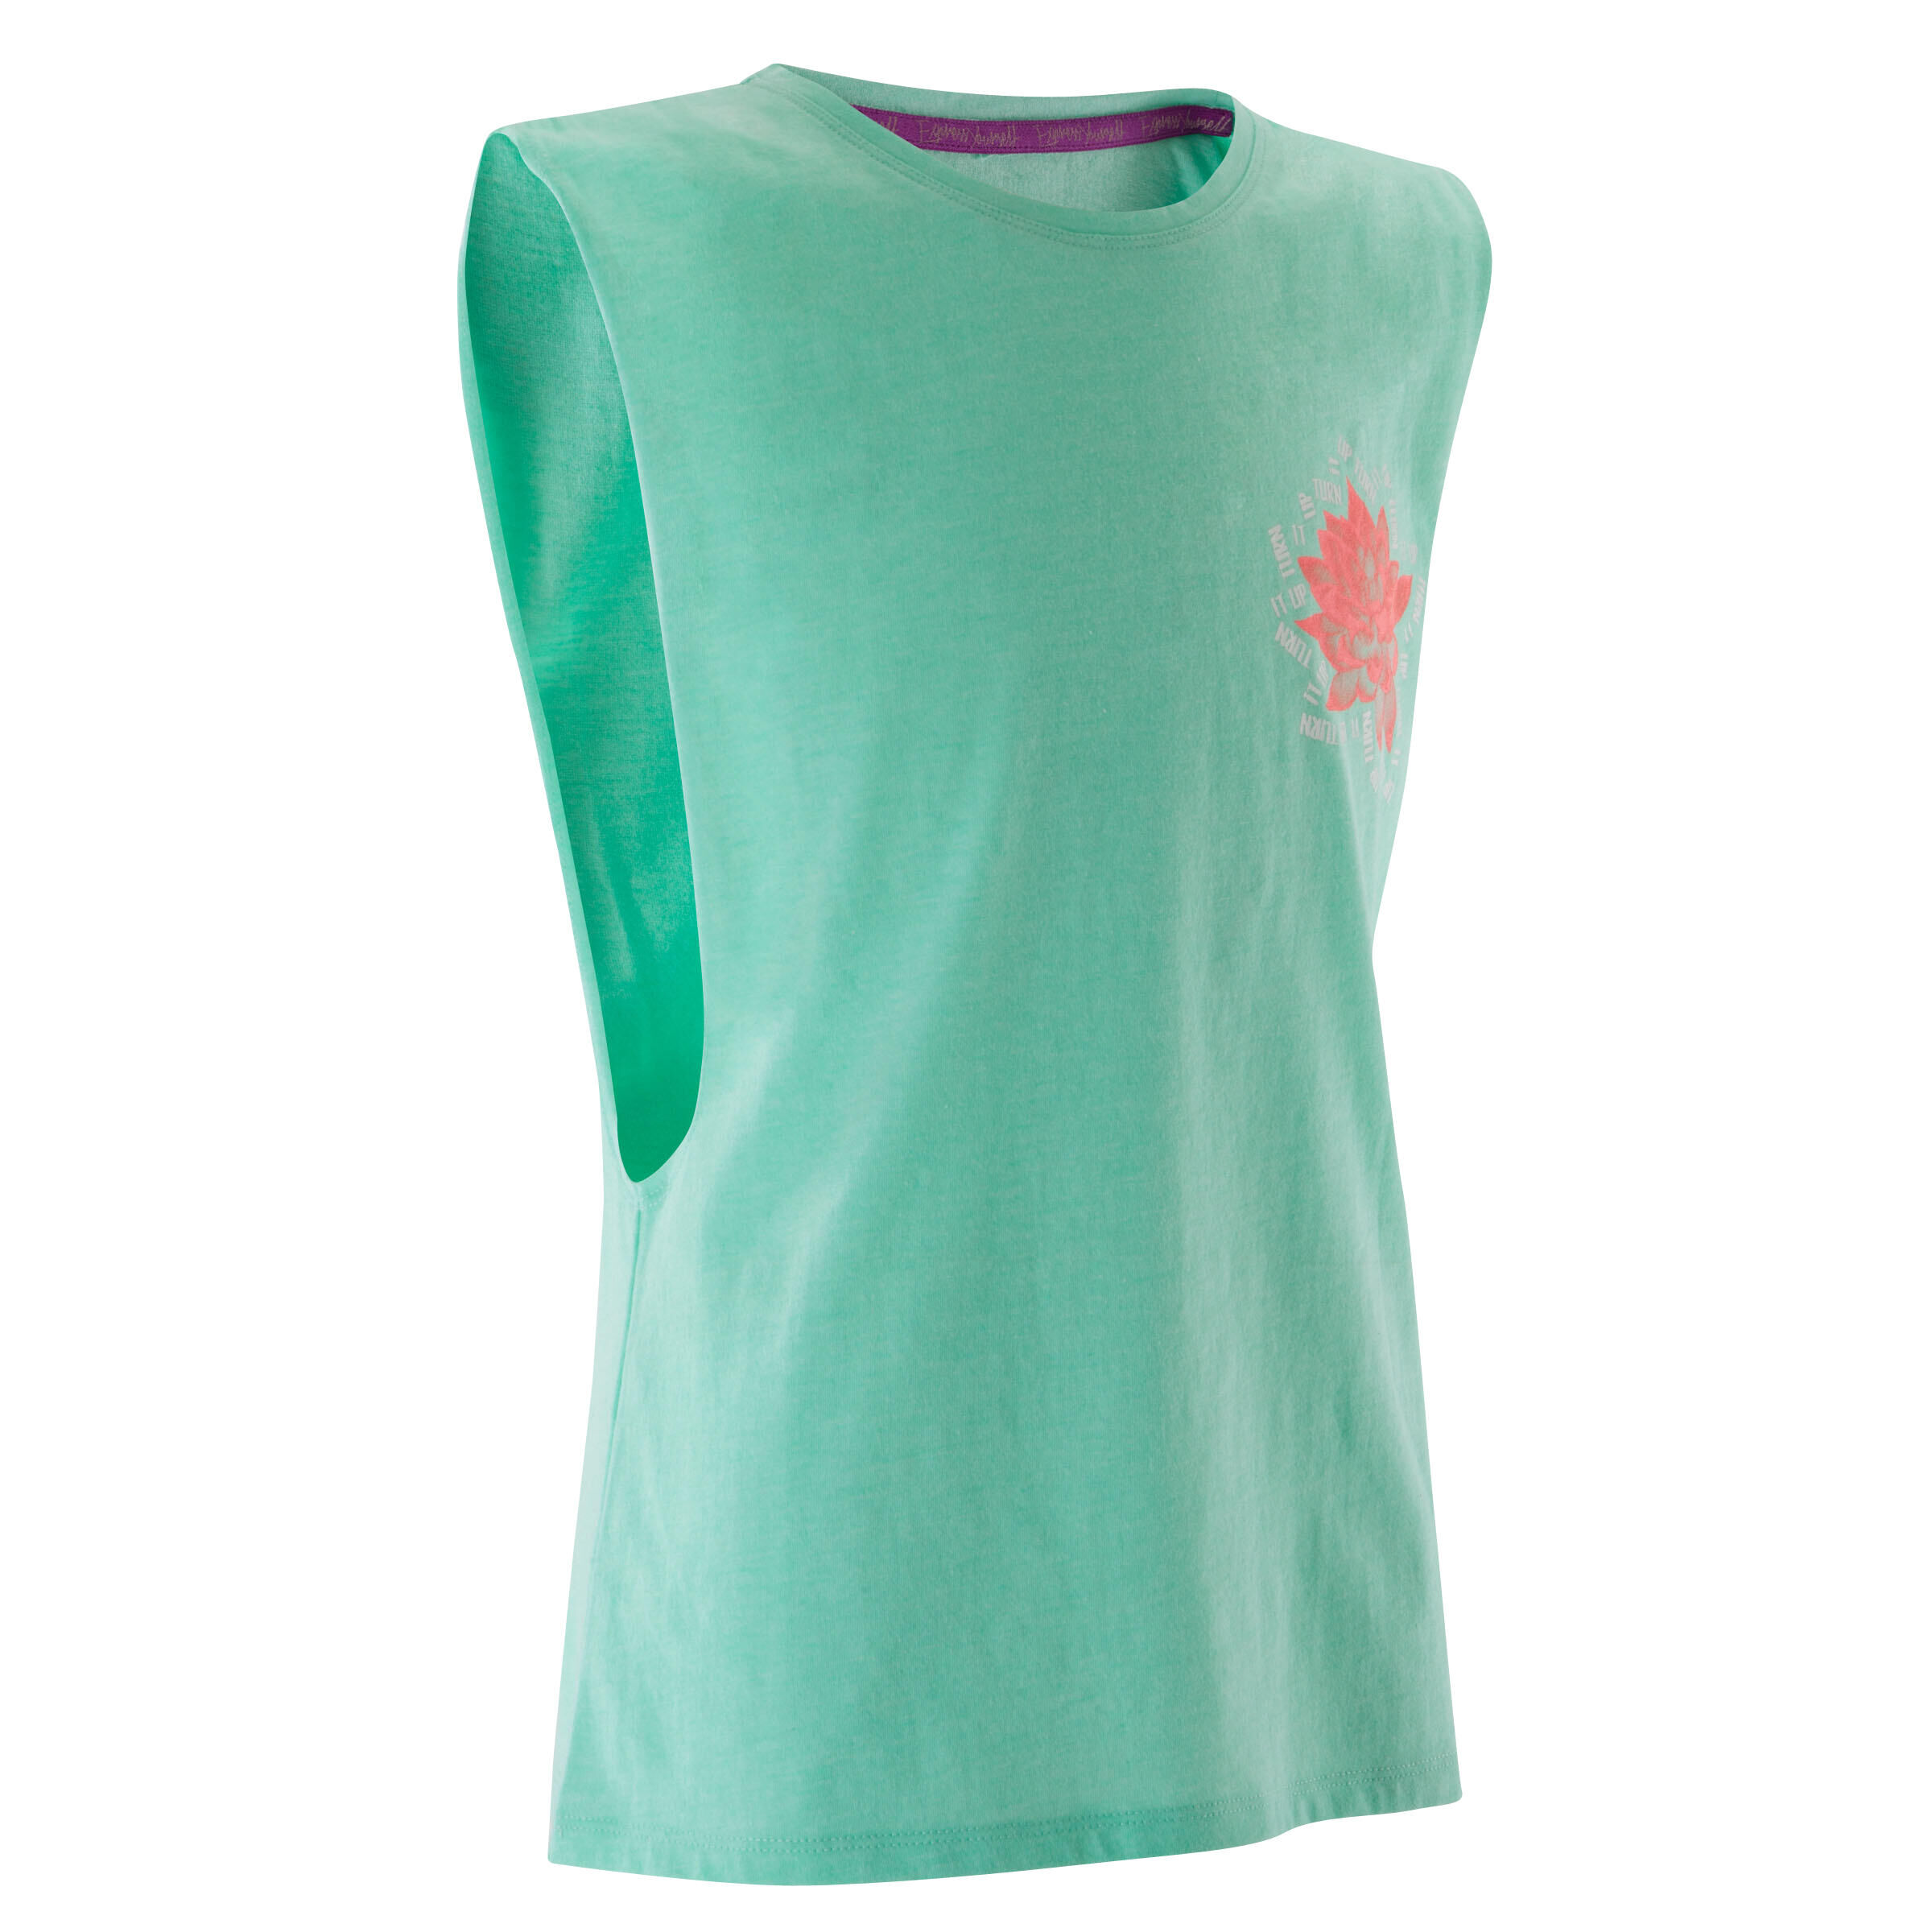 DOMYOS Girls' Open-Sided T-Shirt - Mint Green